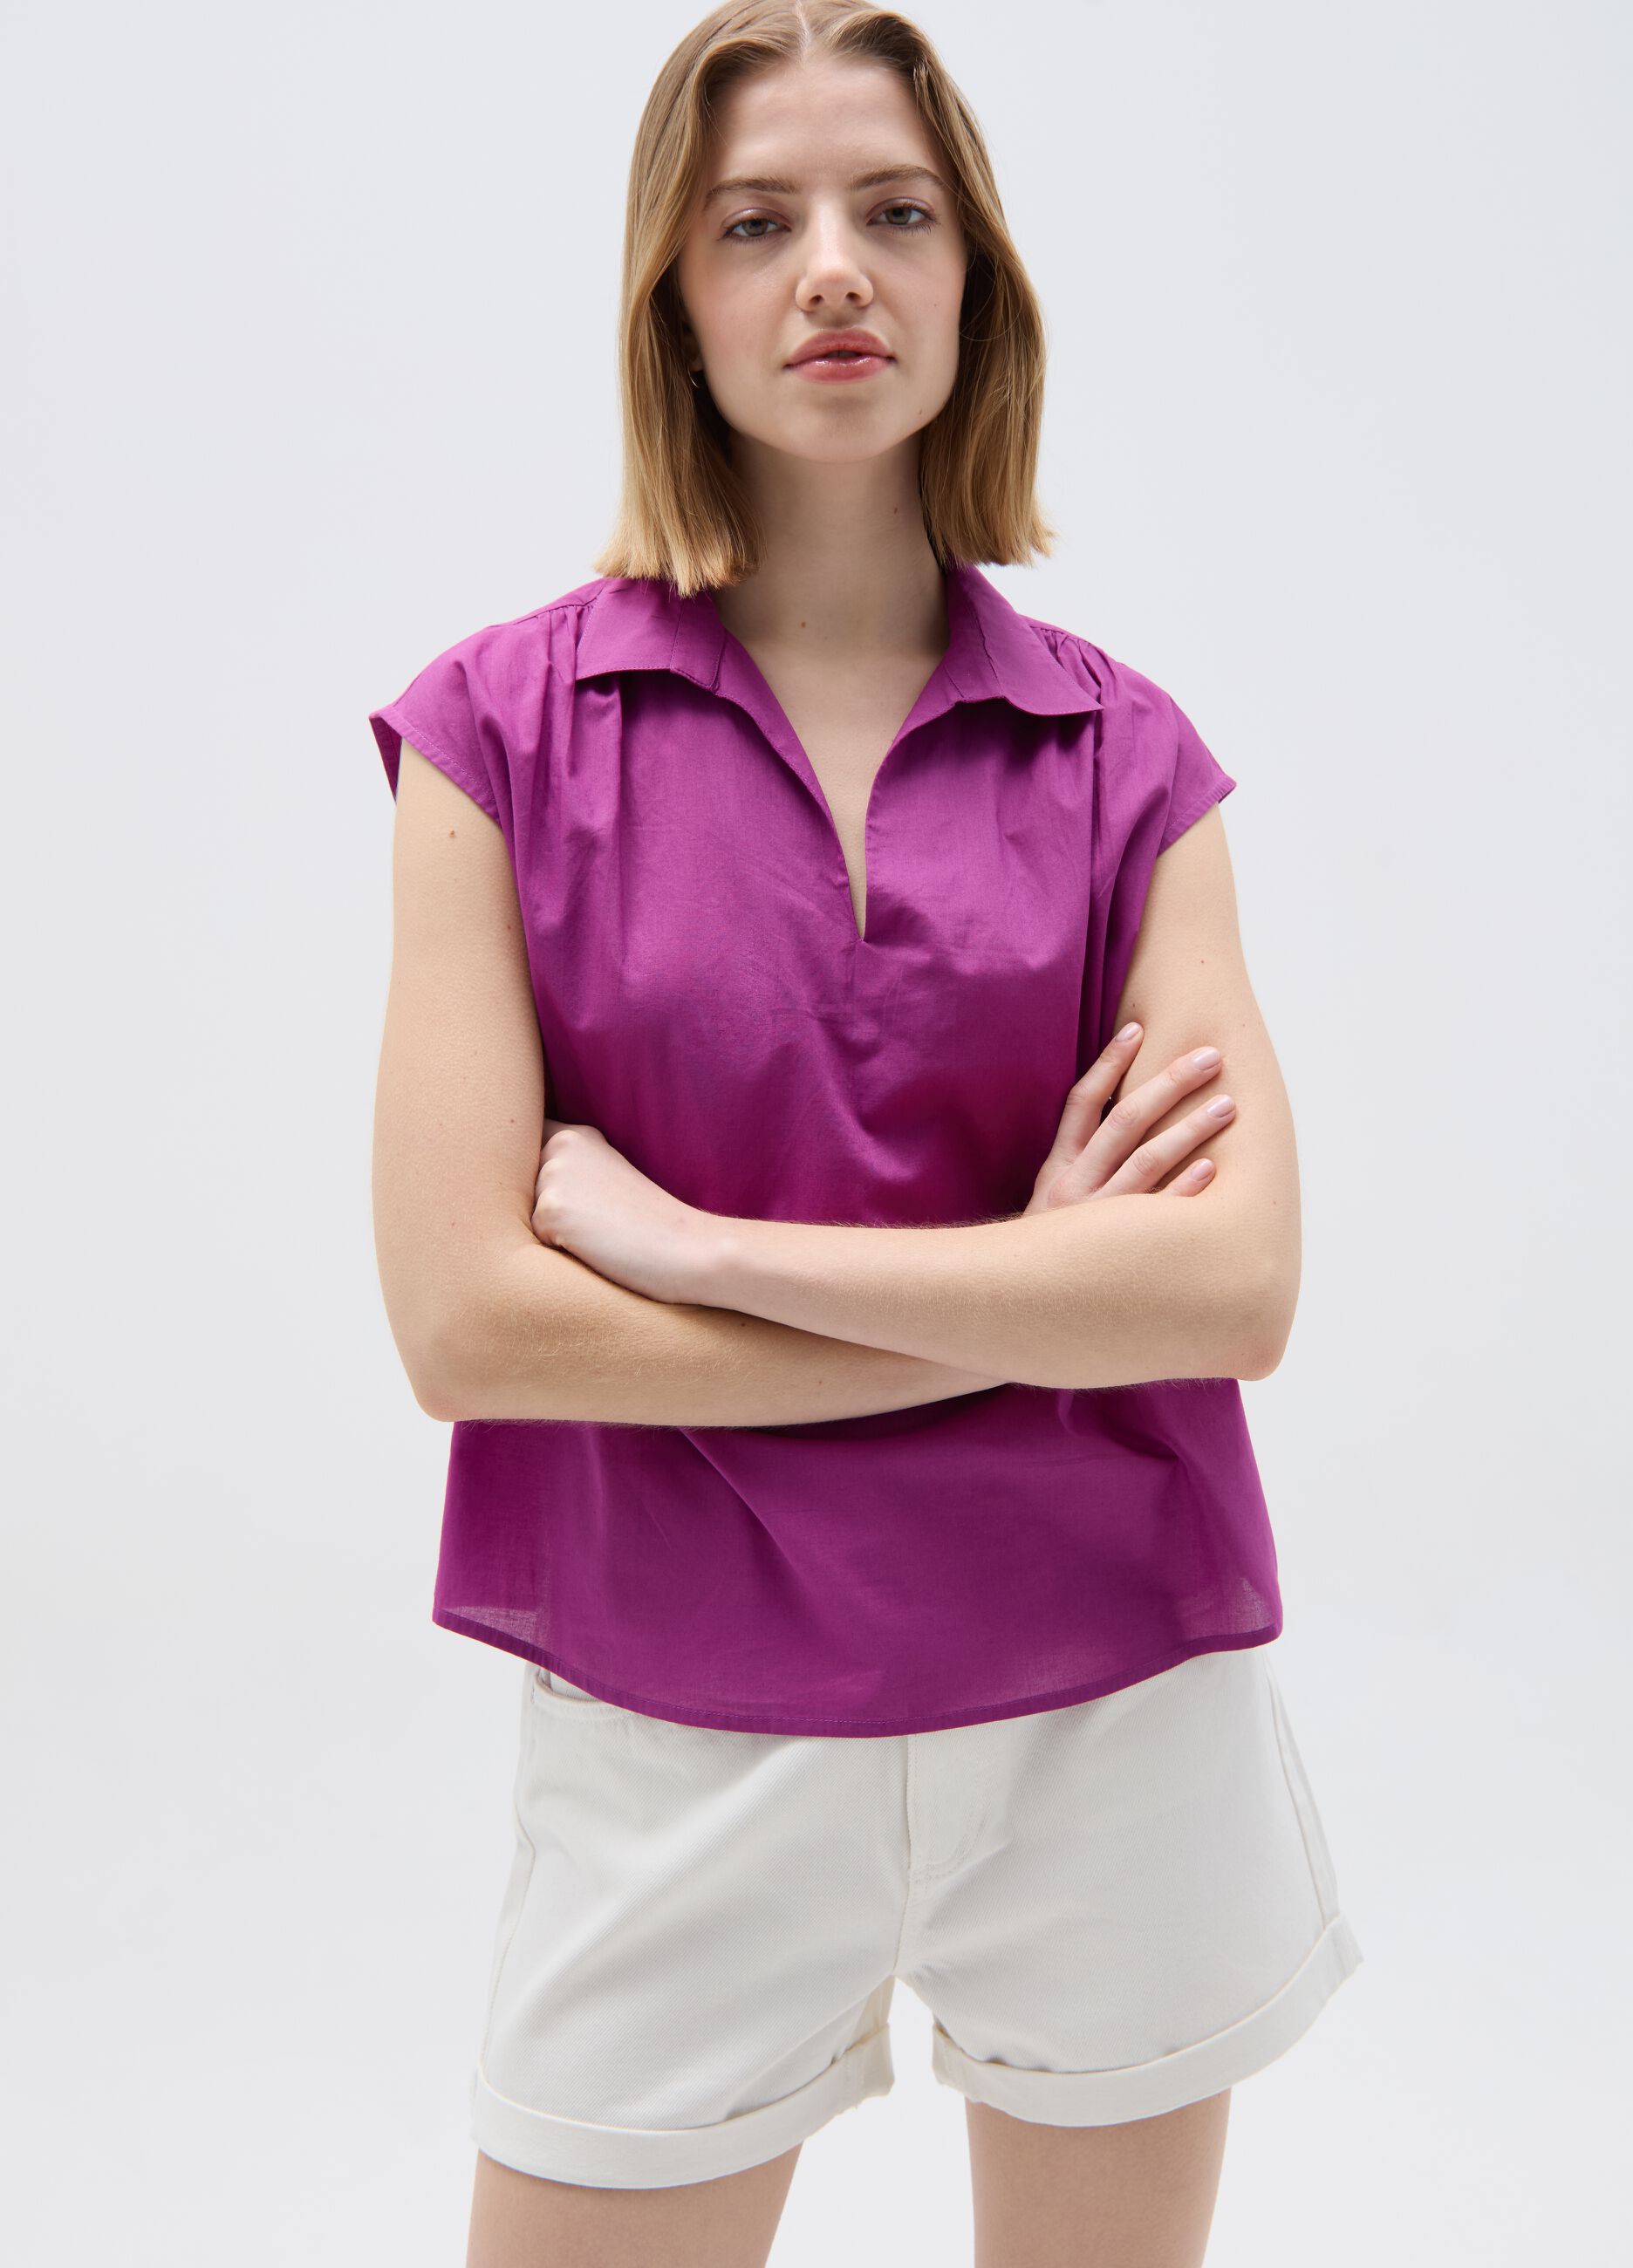 Sleeveless blouse with polo neck